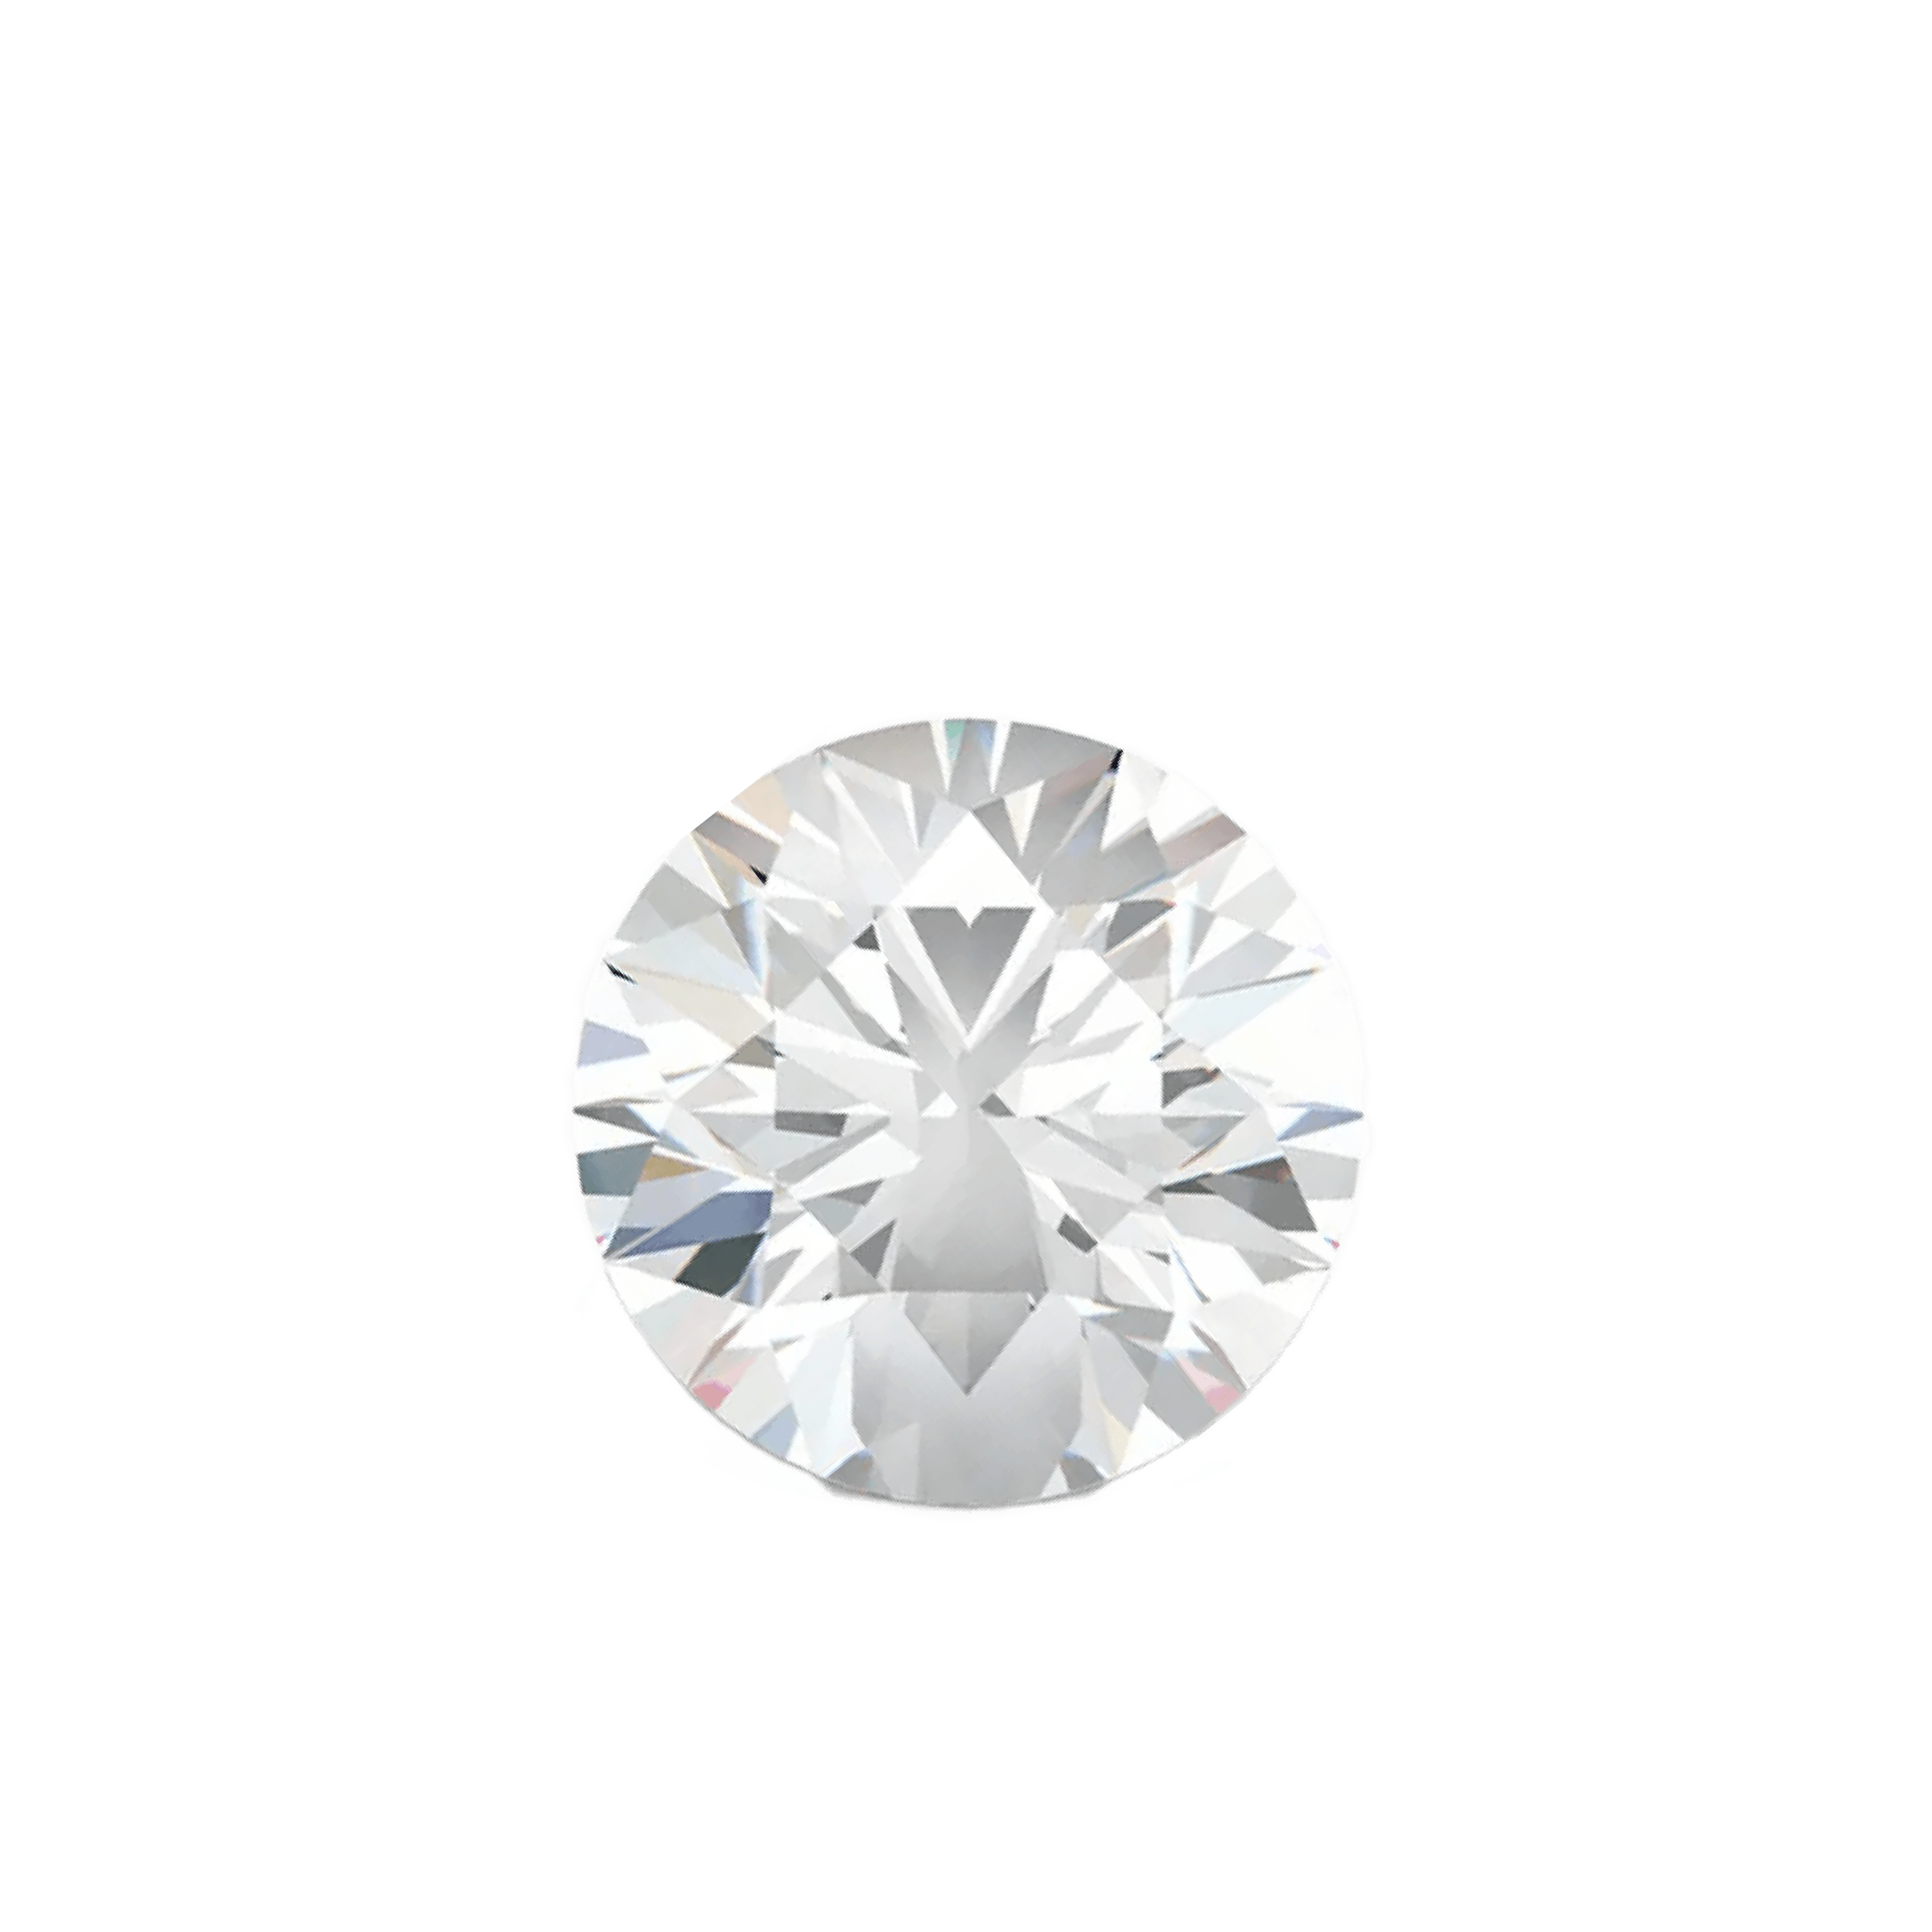 A small mined diamond